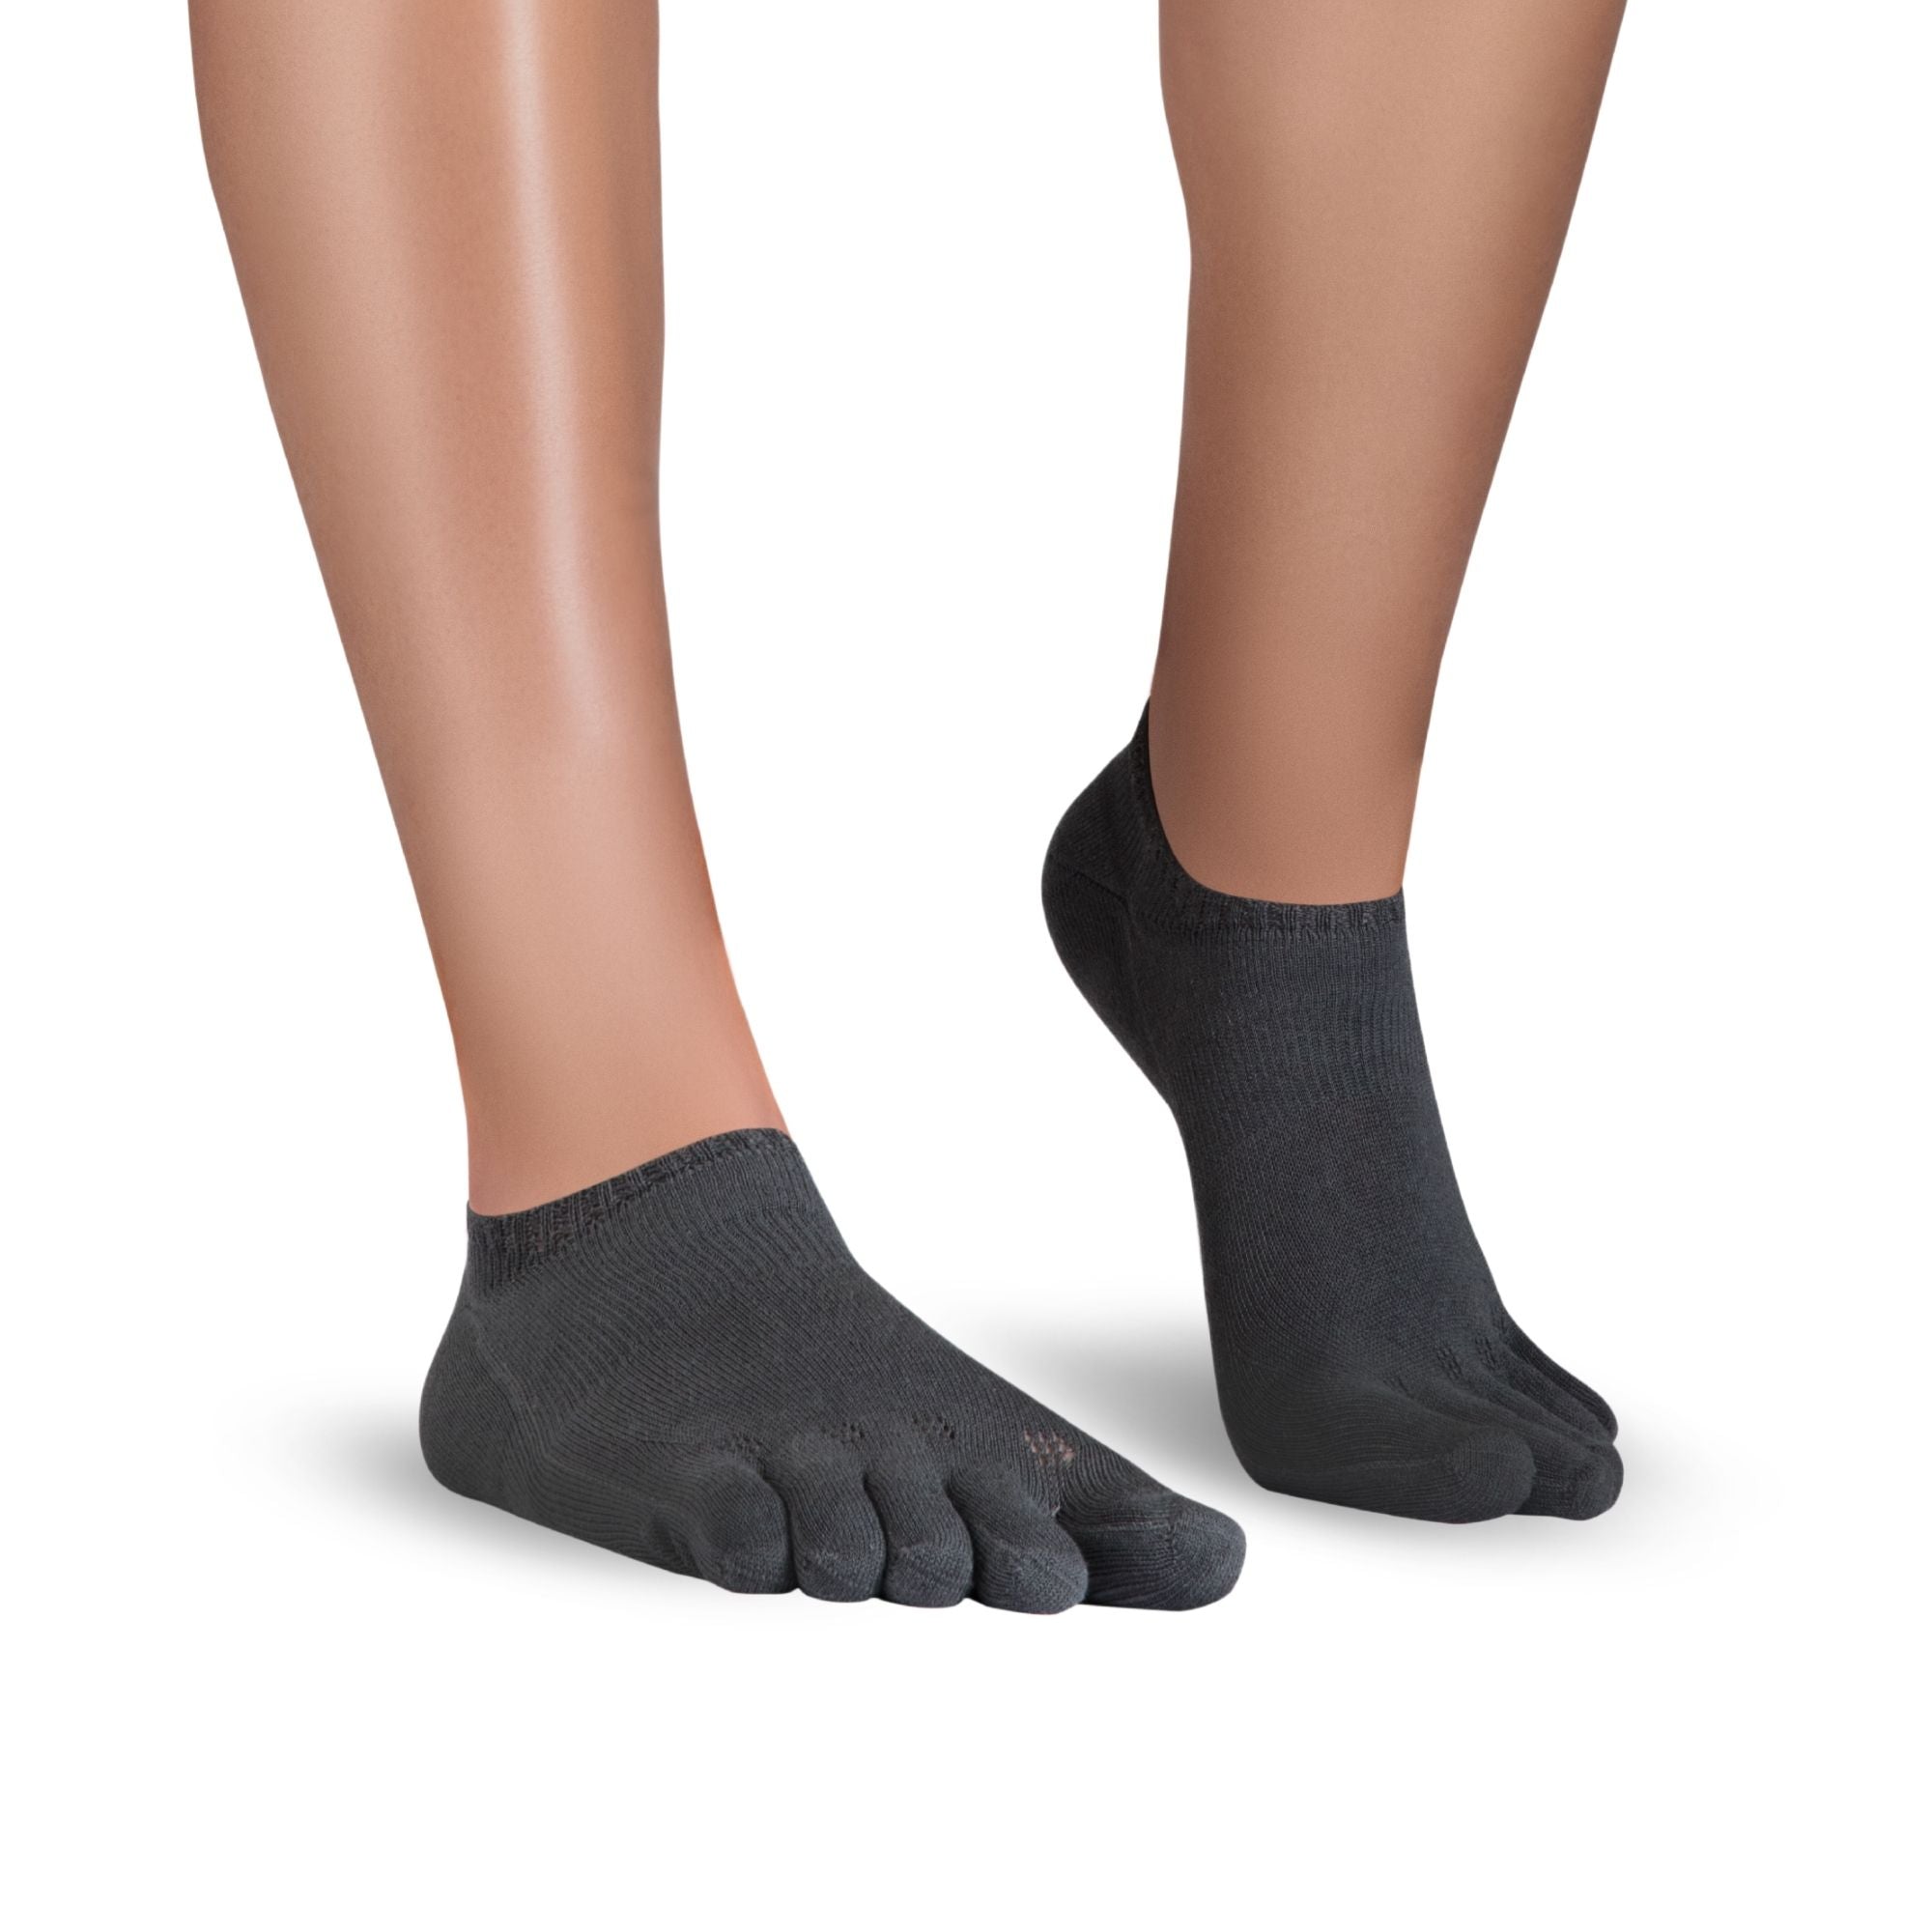 Knitido Track & Trail Running Mates sneaker toe socks - Knitido®